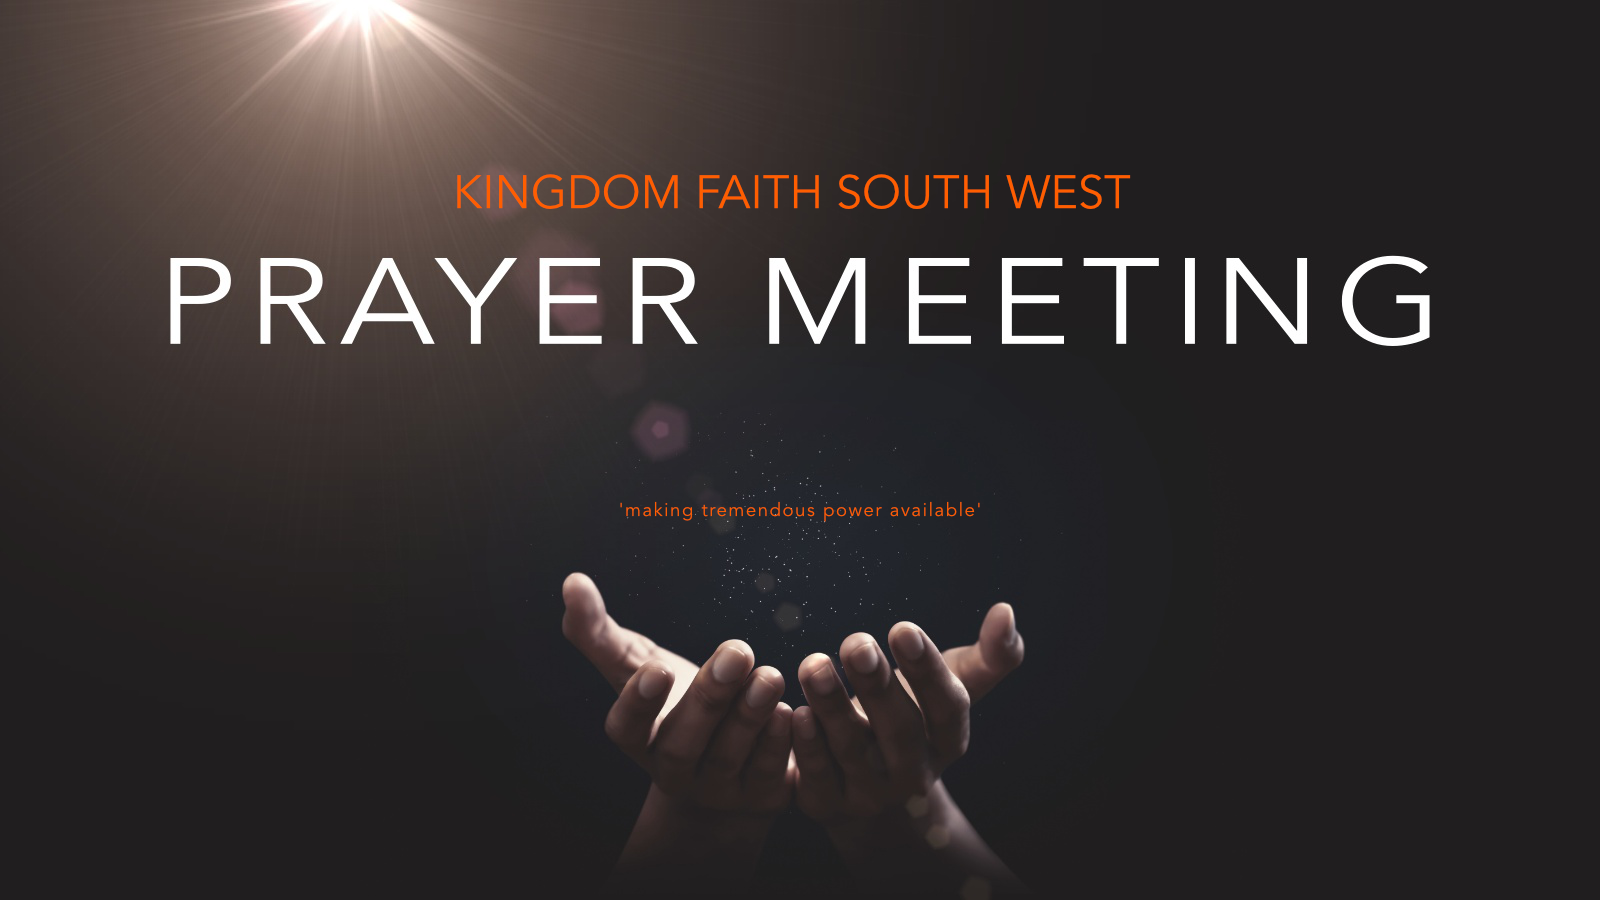 Prayer meeting